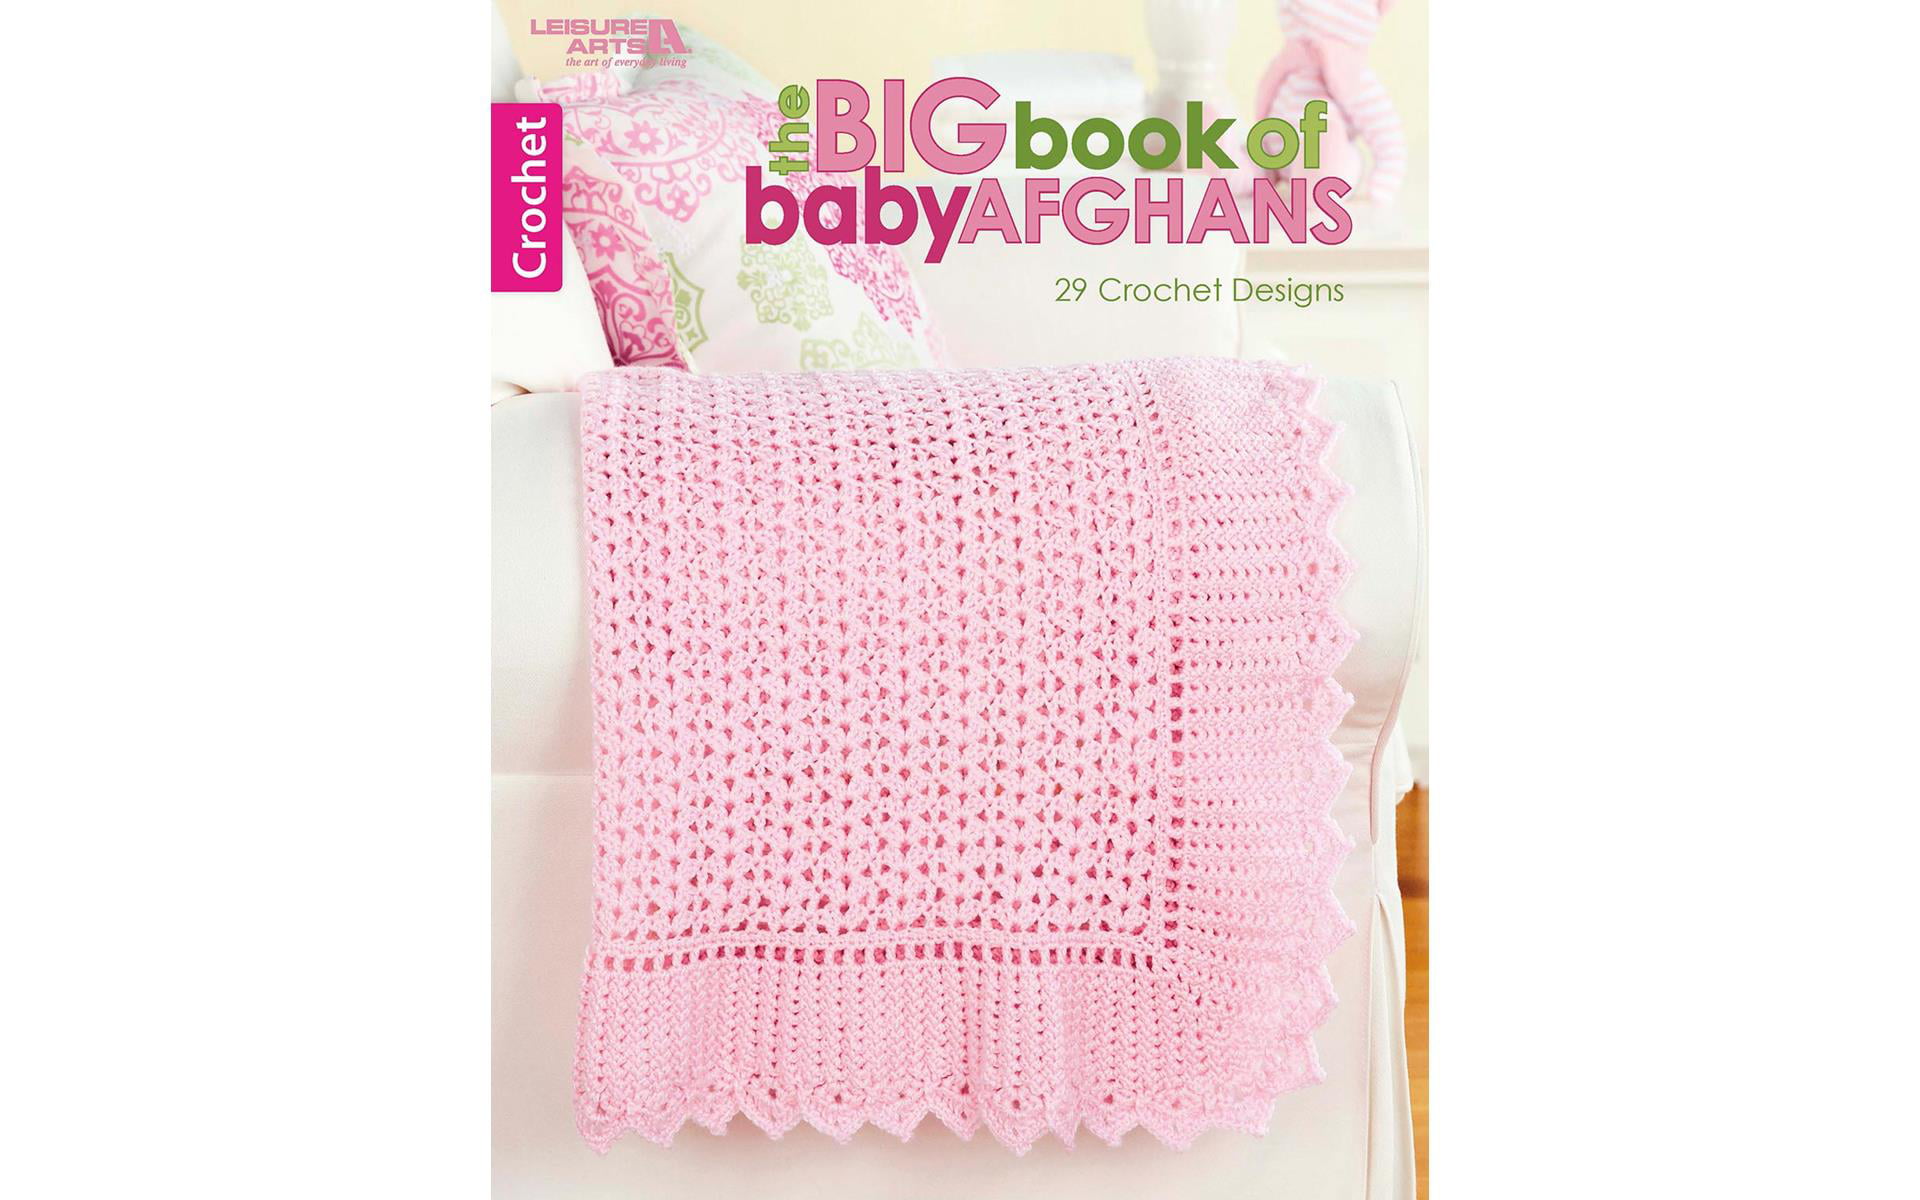 Bernat Baby Blanket Dappled Ever After Pink Yarn - 2 Pack of 300g